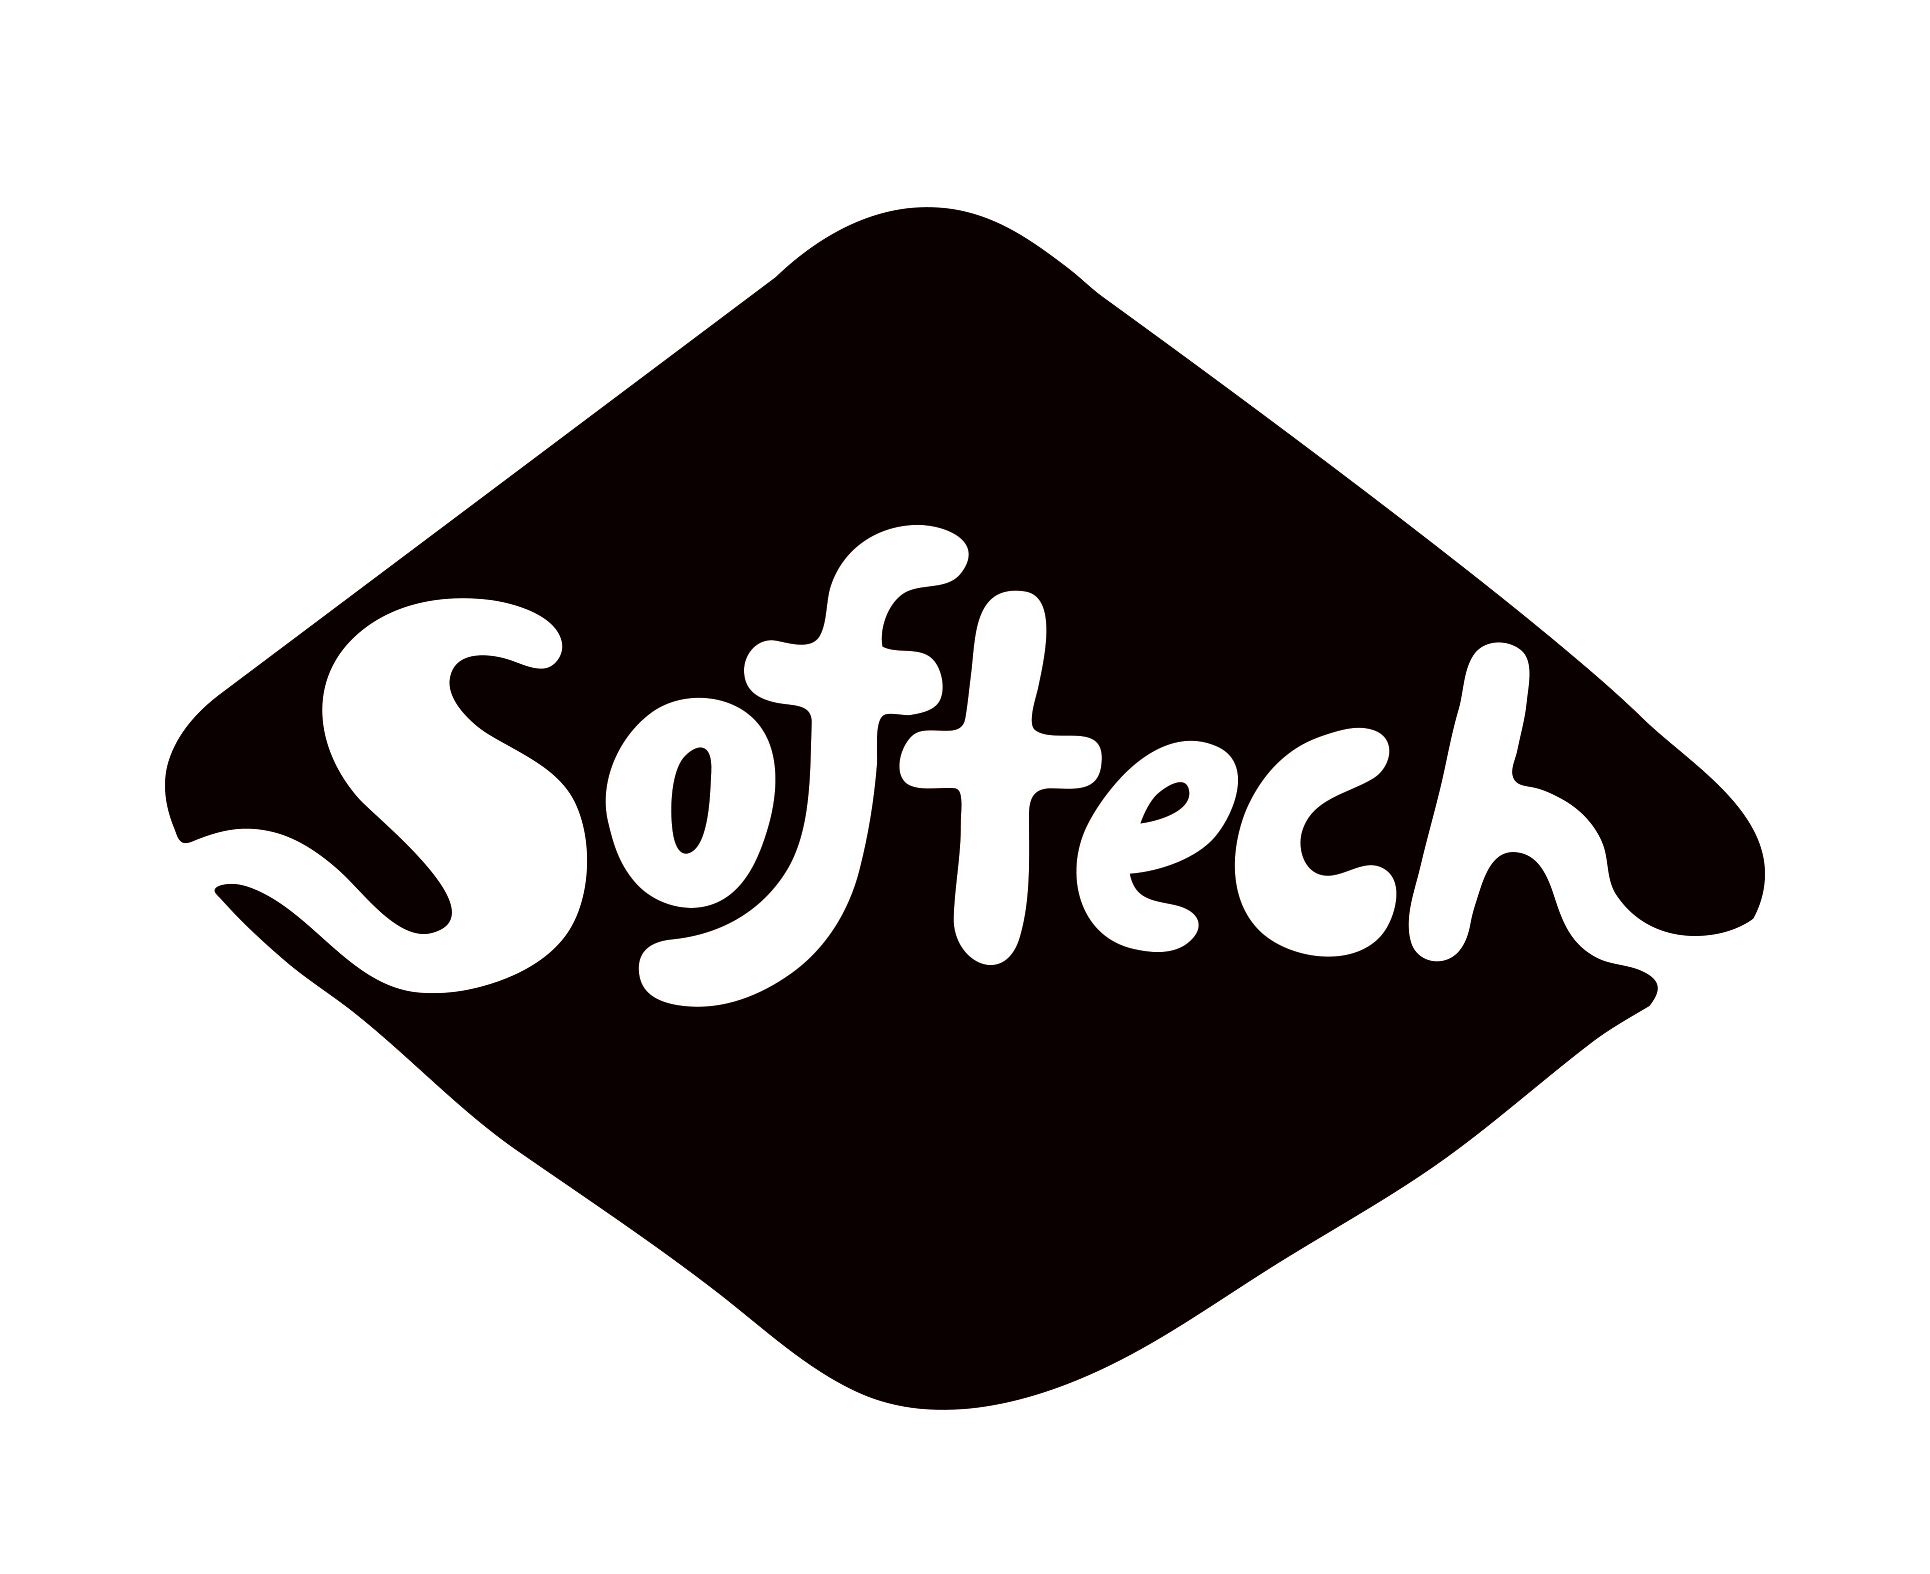 Softech